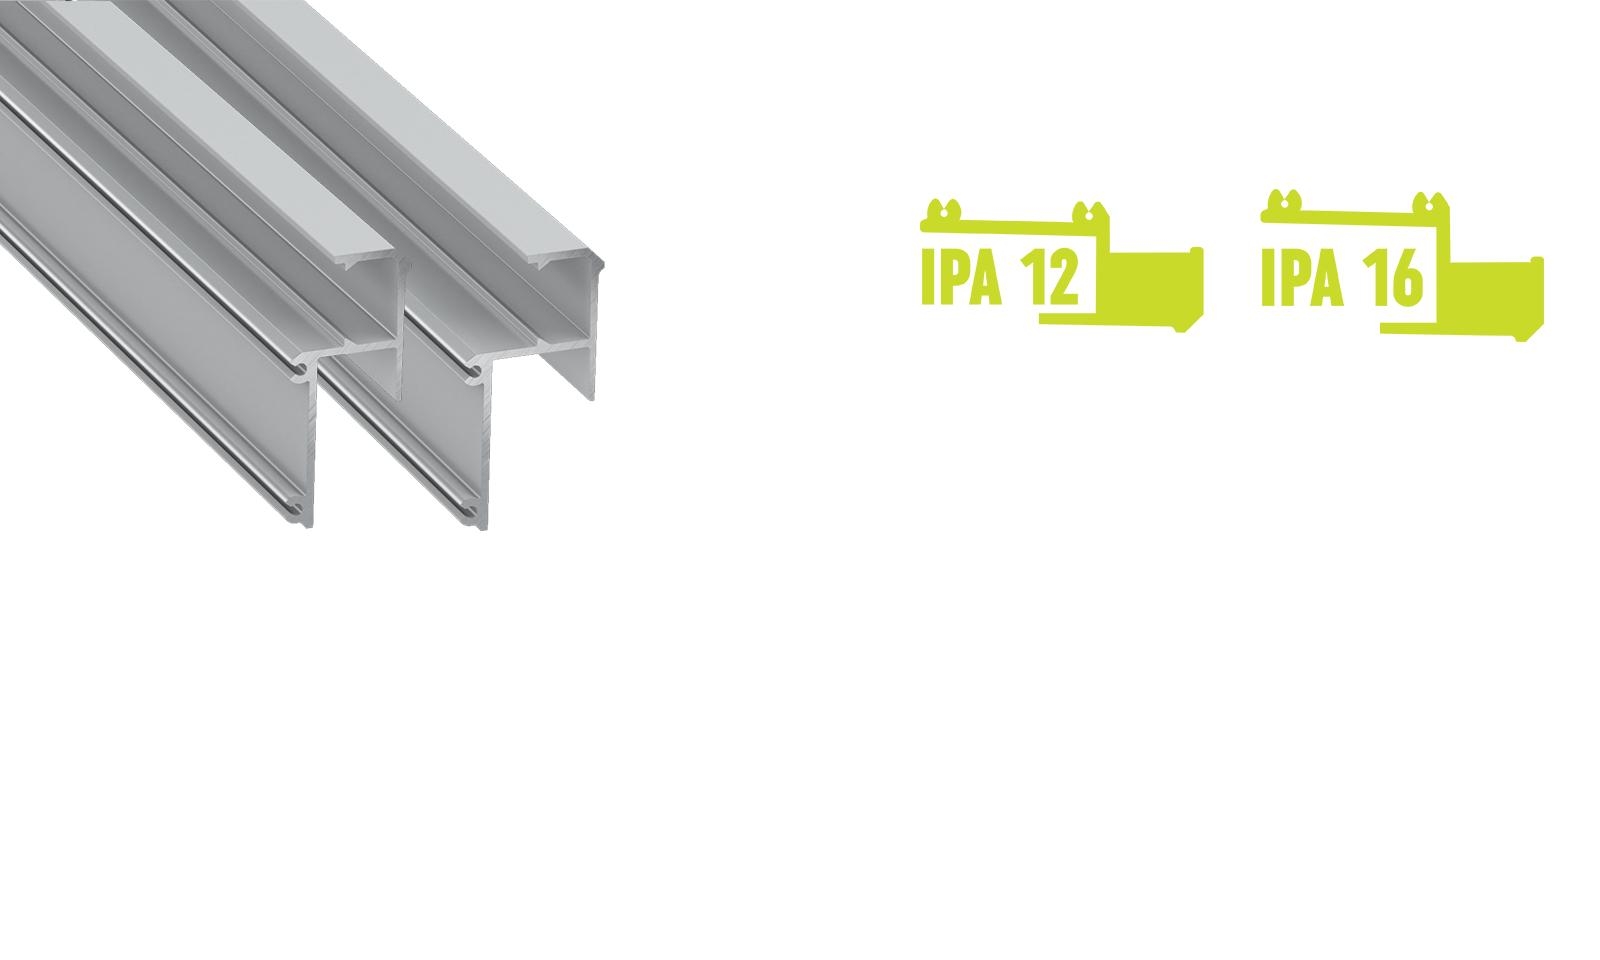 LUMINES "IPA12" / "IPA16" surface mounted profiles